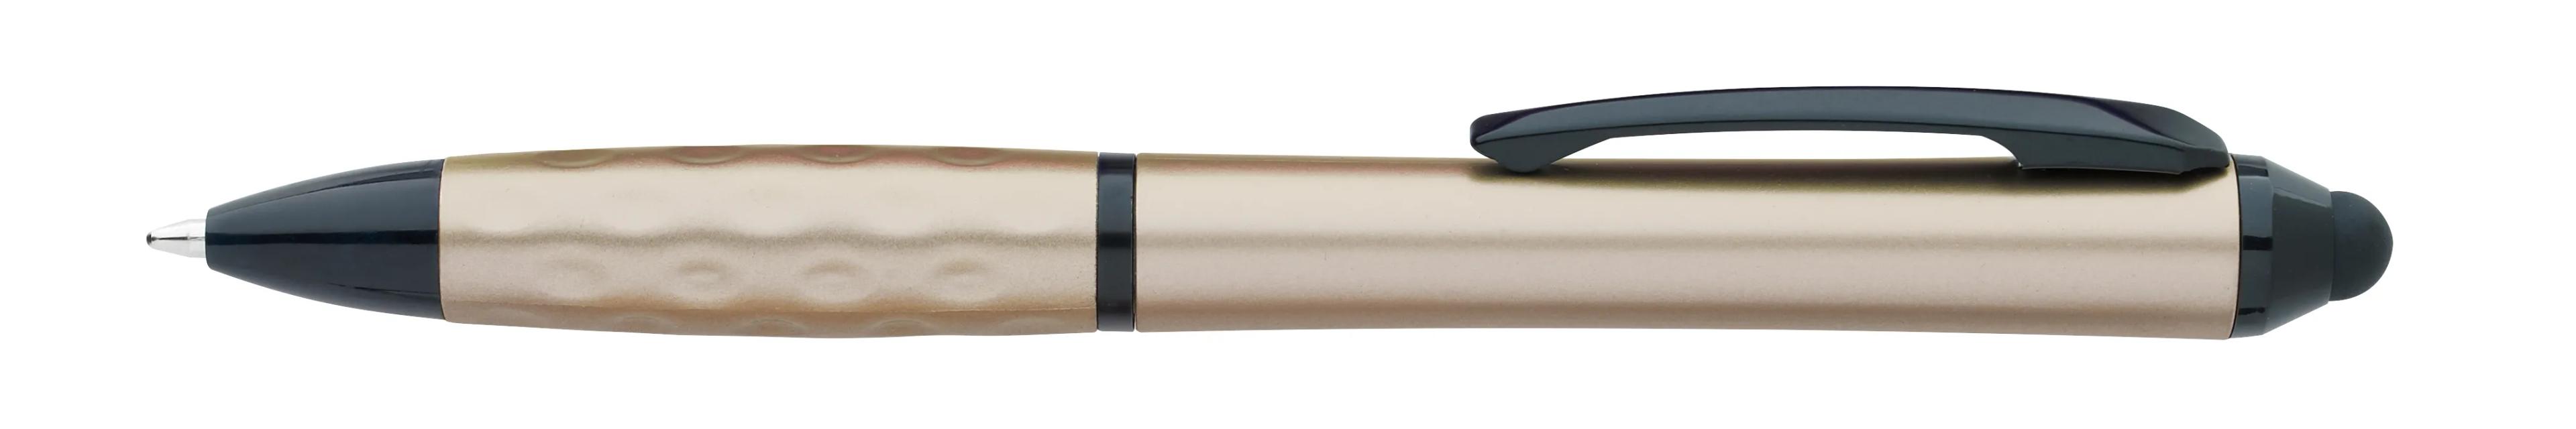 Tev Metallic Stylus Pen 38 of 77